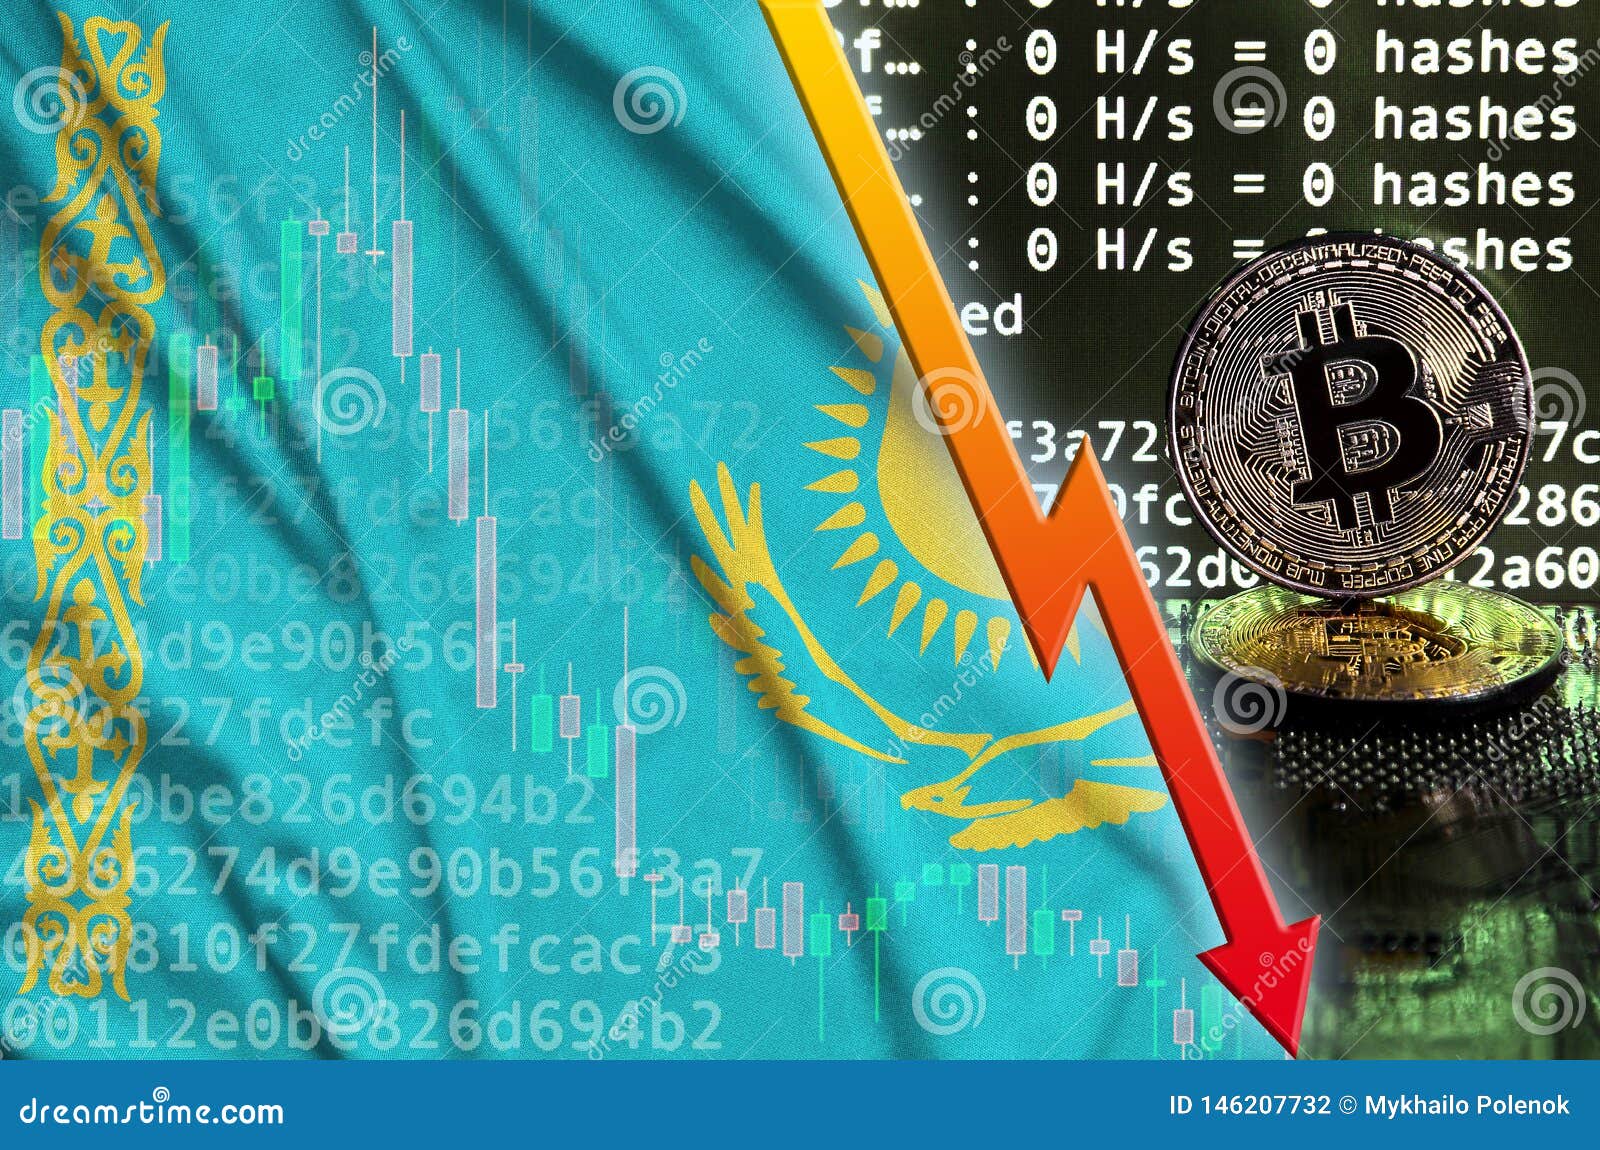 Kazakhstan bitcoin daniel jeffries crypto